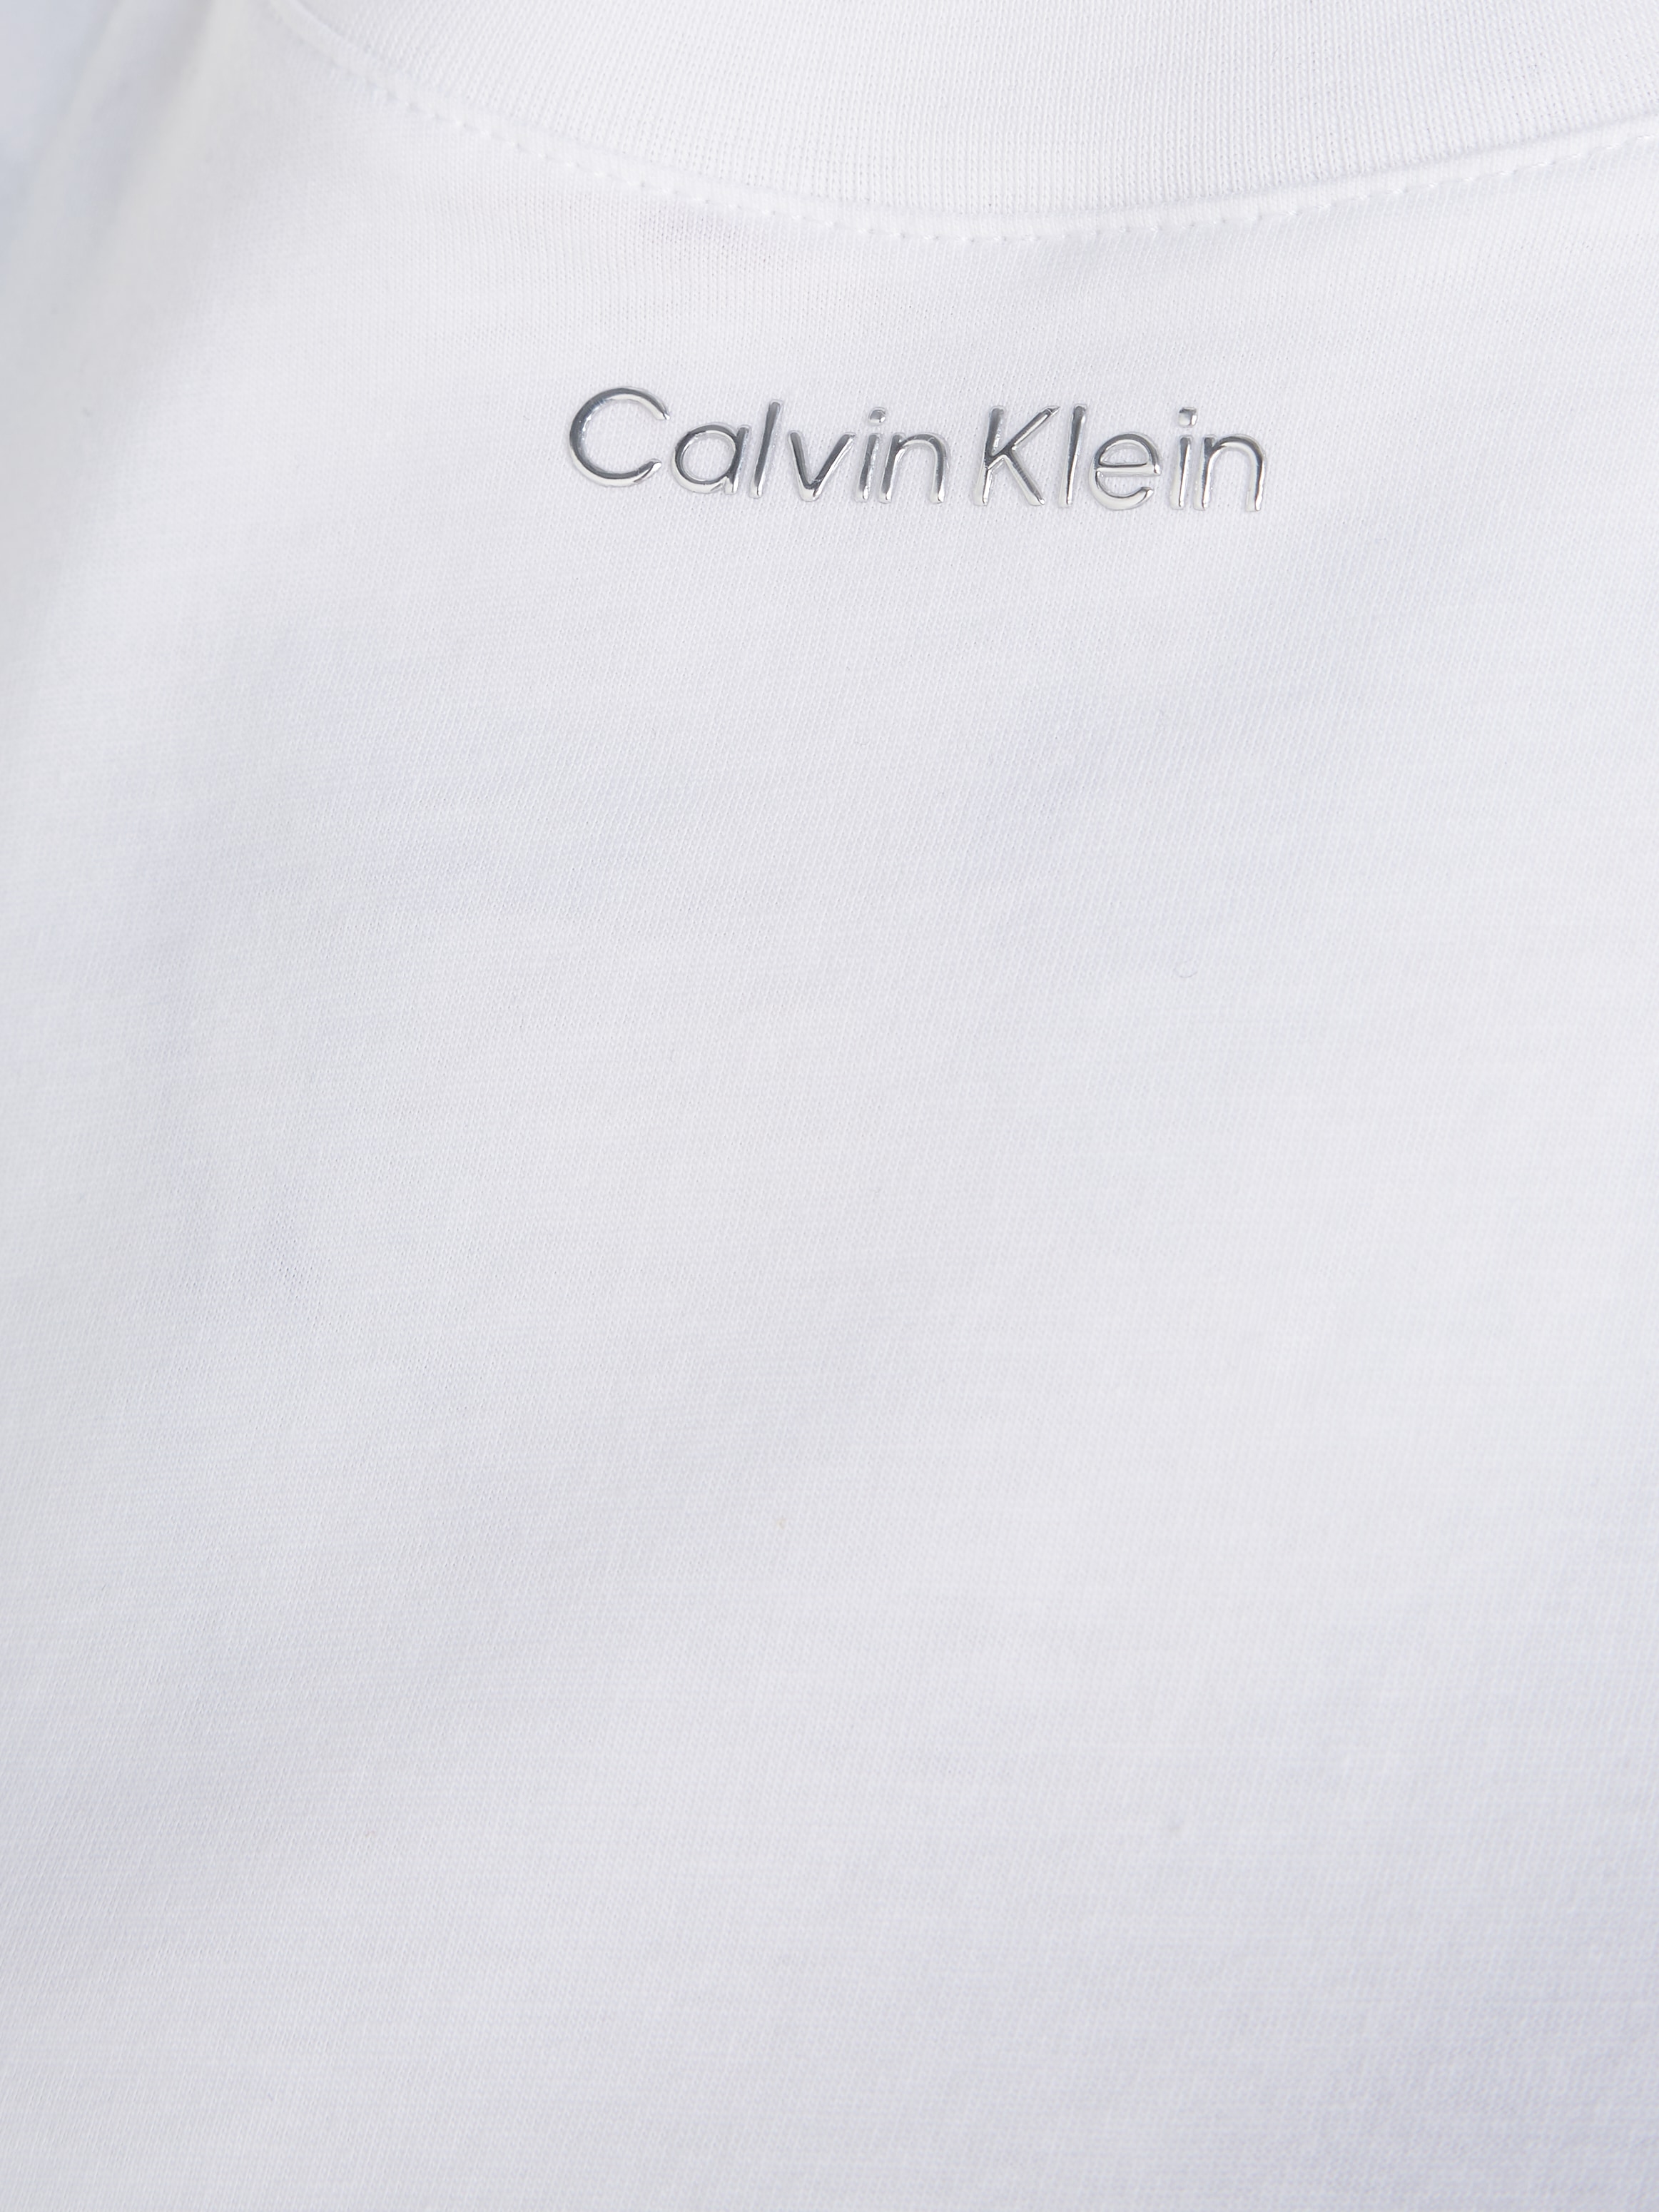 I\'m SHIRT« T-Shirt Calvin kaufen T LOGO »METALLIC Klein | MICRO walking online